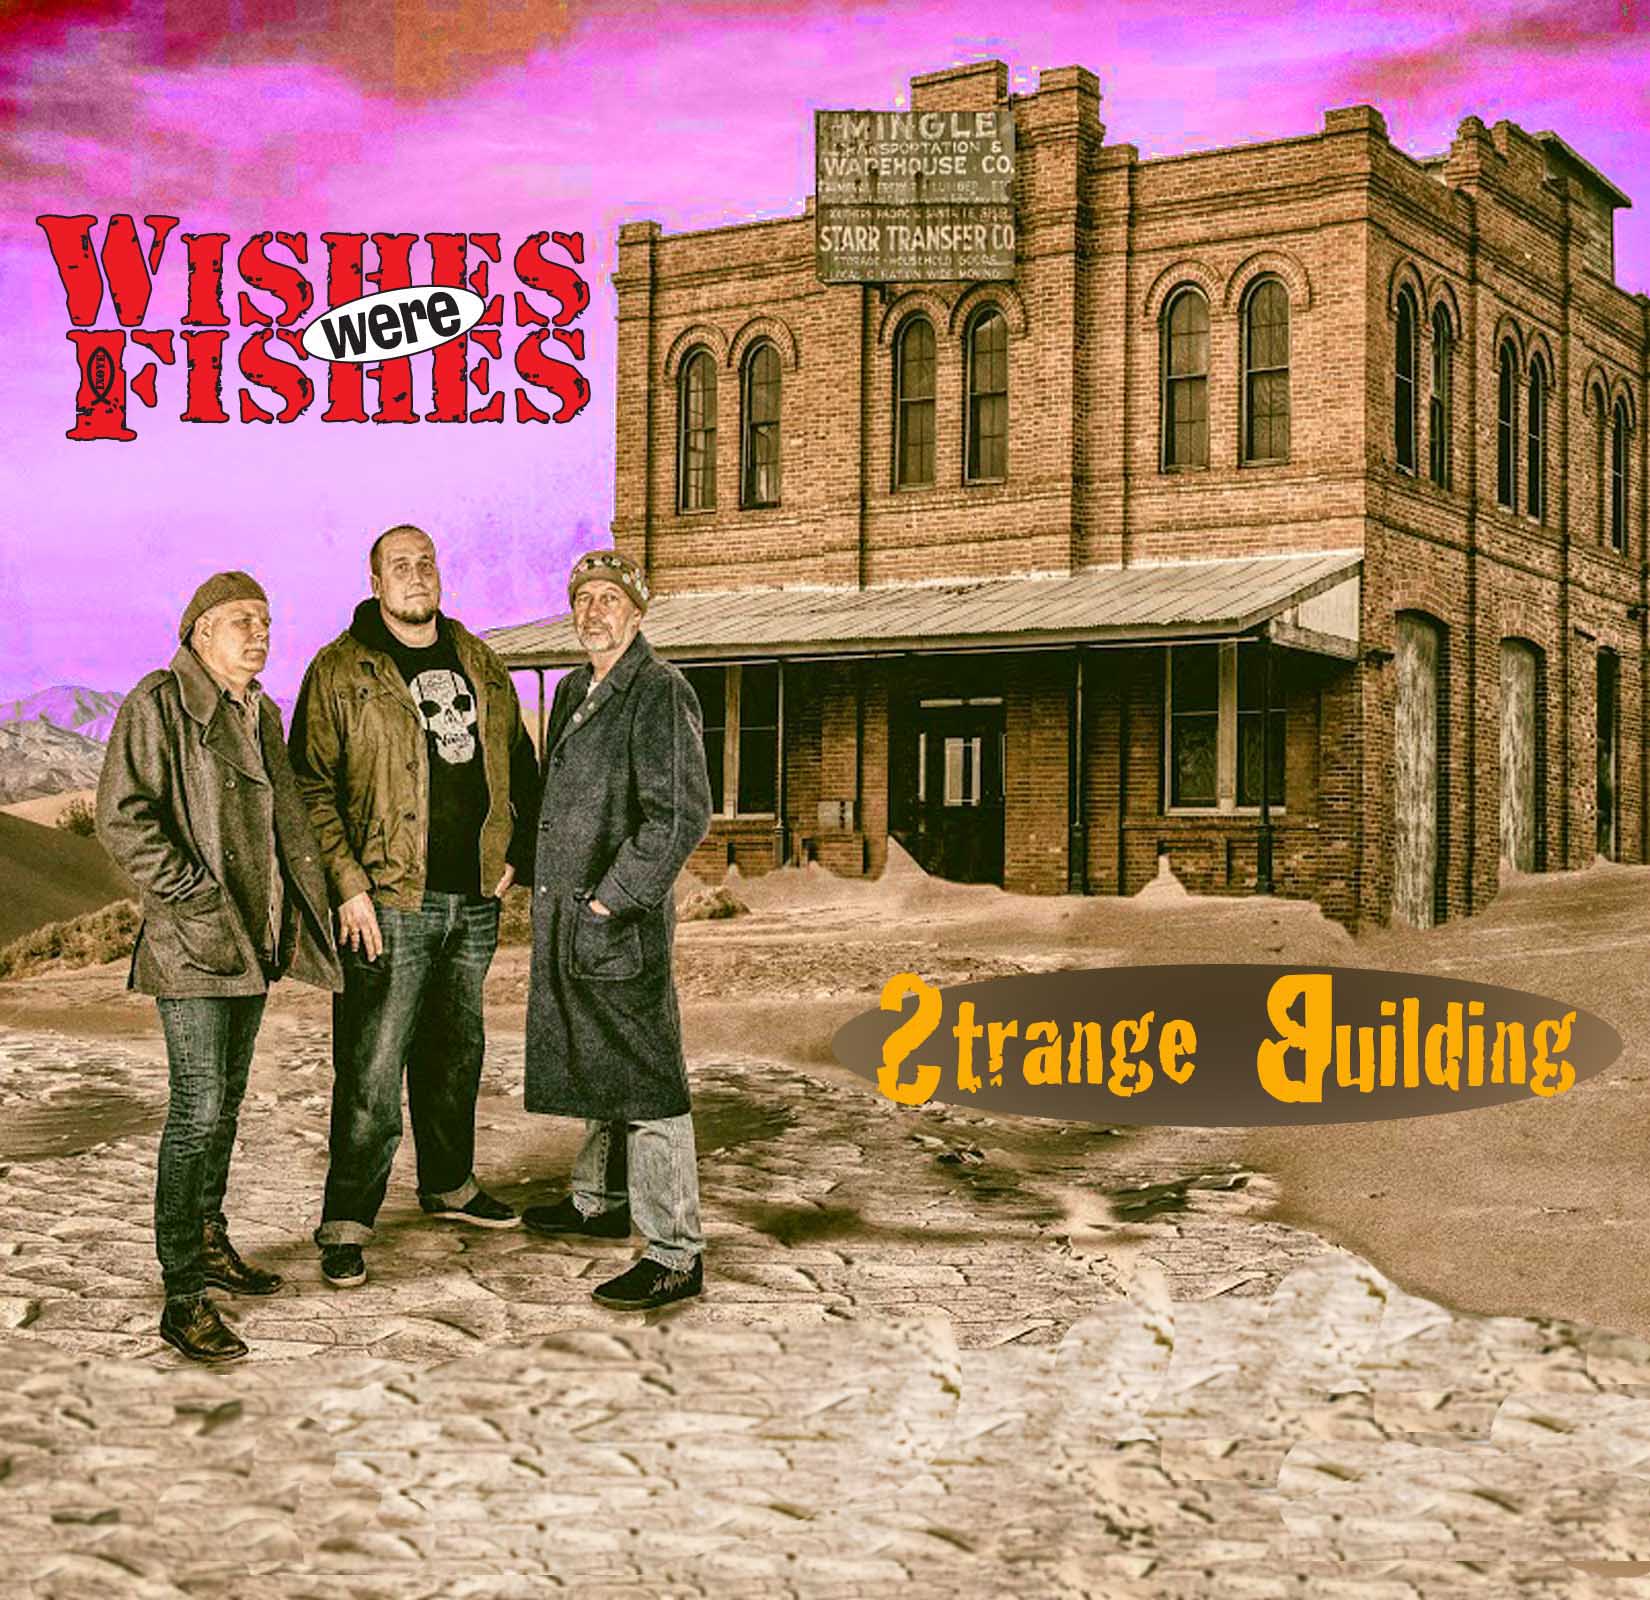 Strange Building CD album cover